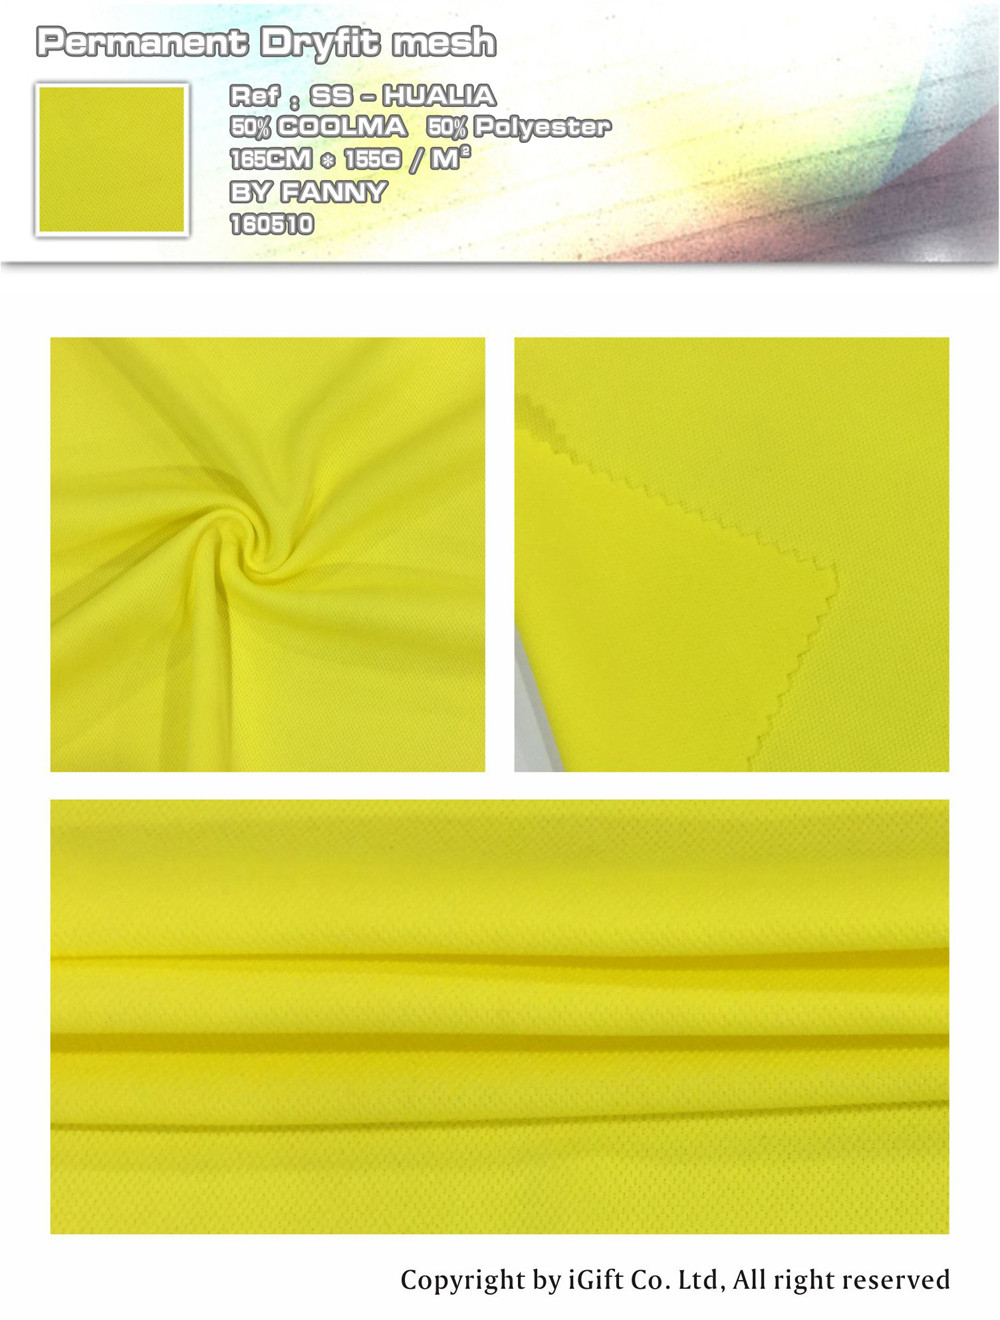 Permantne Dryfit mesh  Ref:SS-HUALIA    50％ COOLMA   50％Polyester    165CM*155G/M²   BY  FANNY   160510